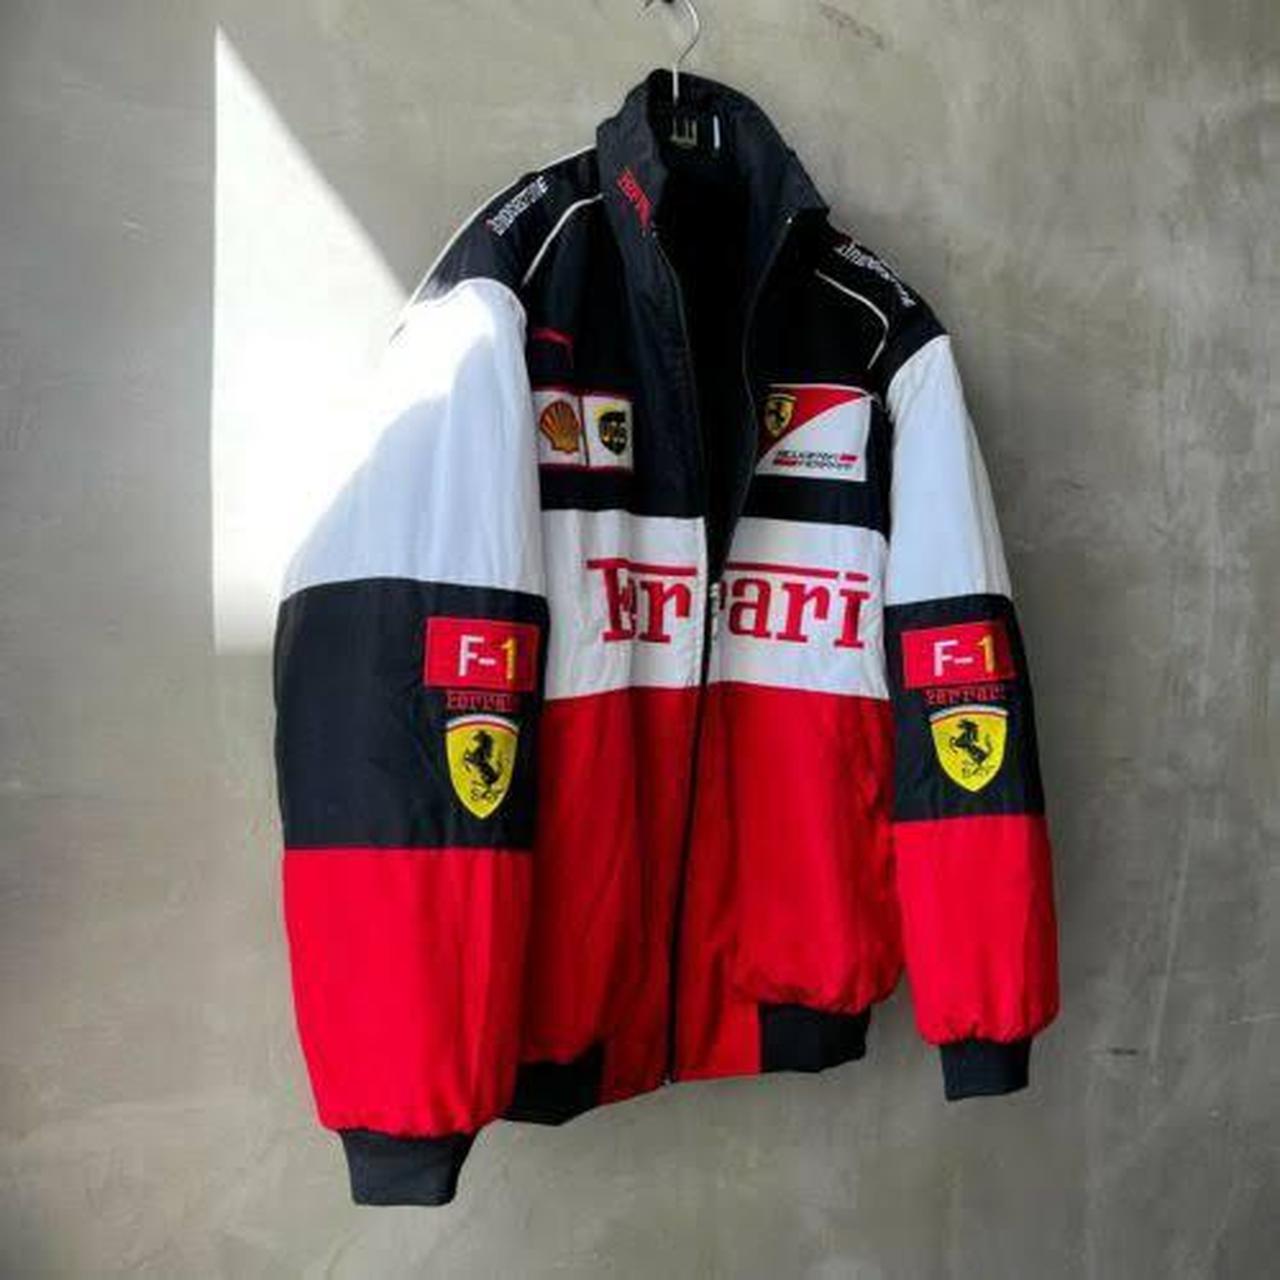 🏎 Racing Jacket 🏎 This Ferrari style jacket is... - Depop